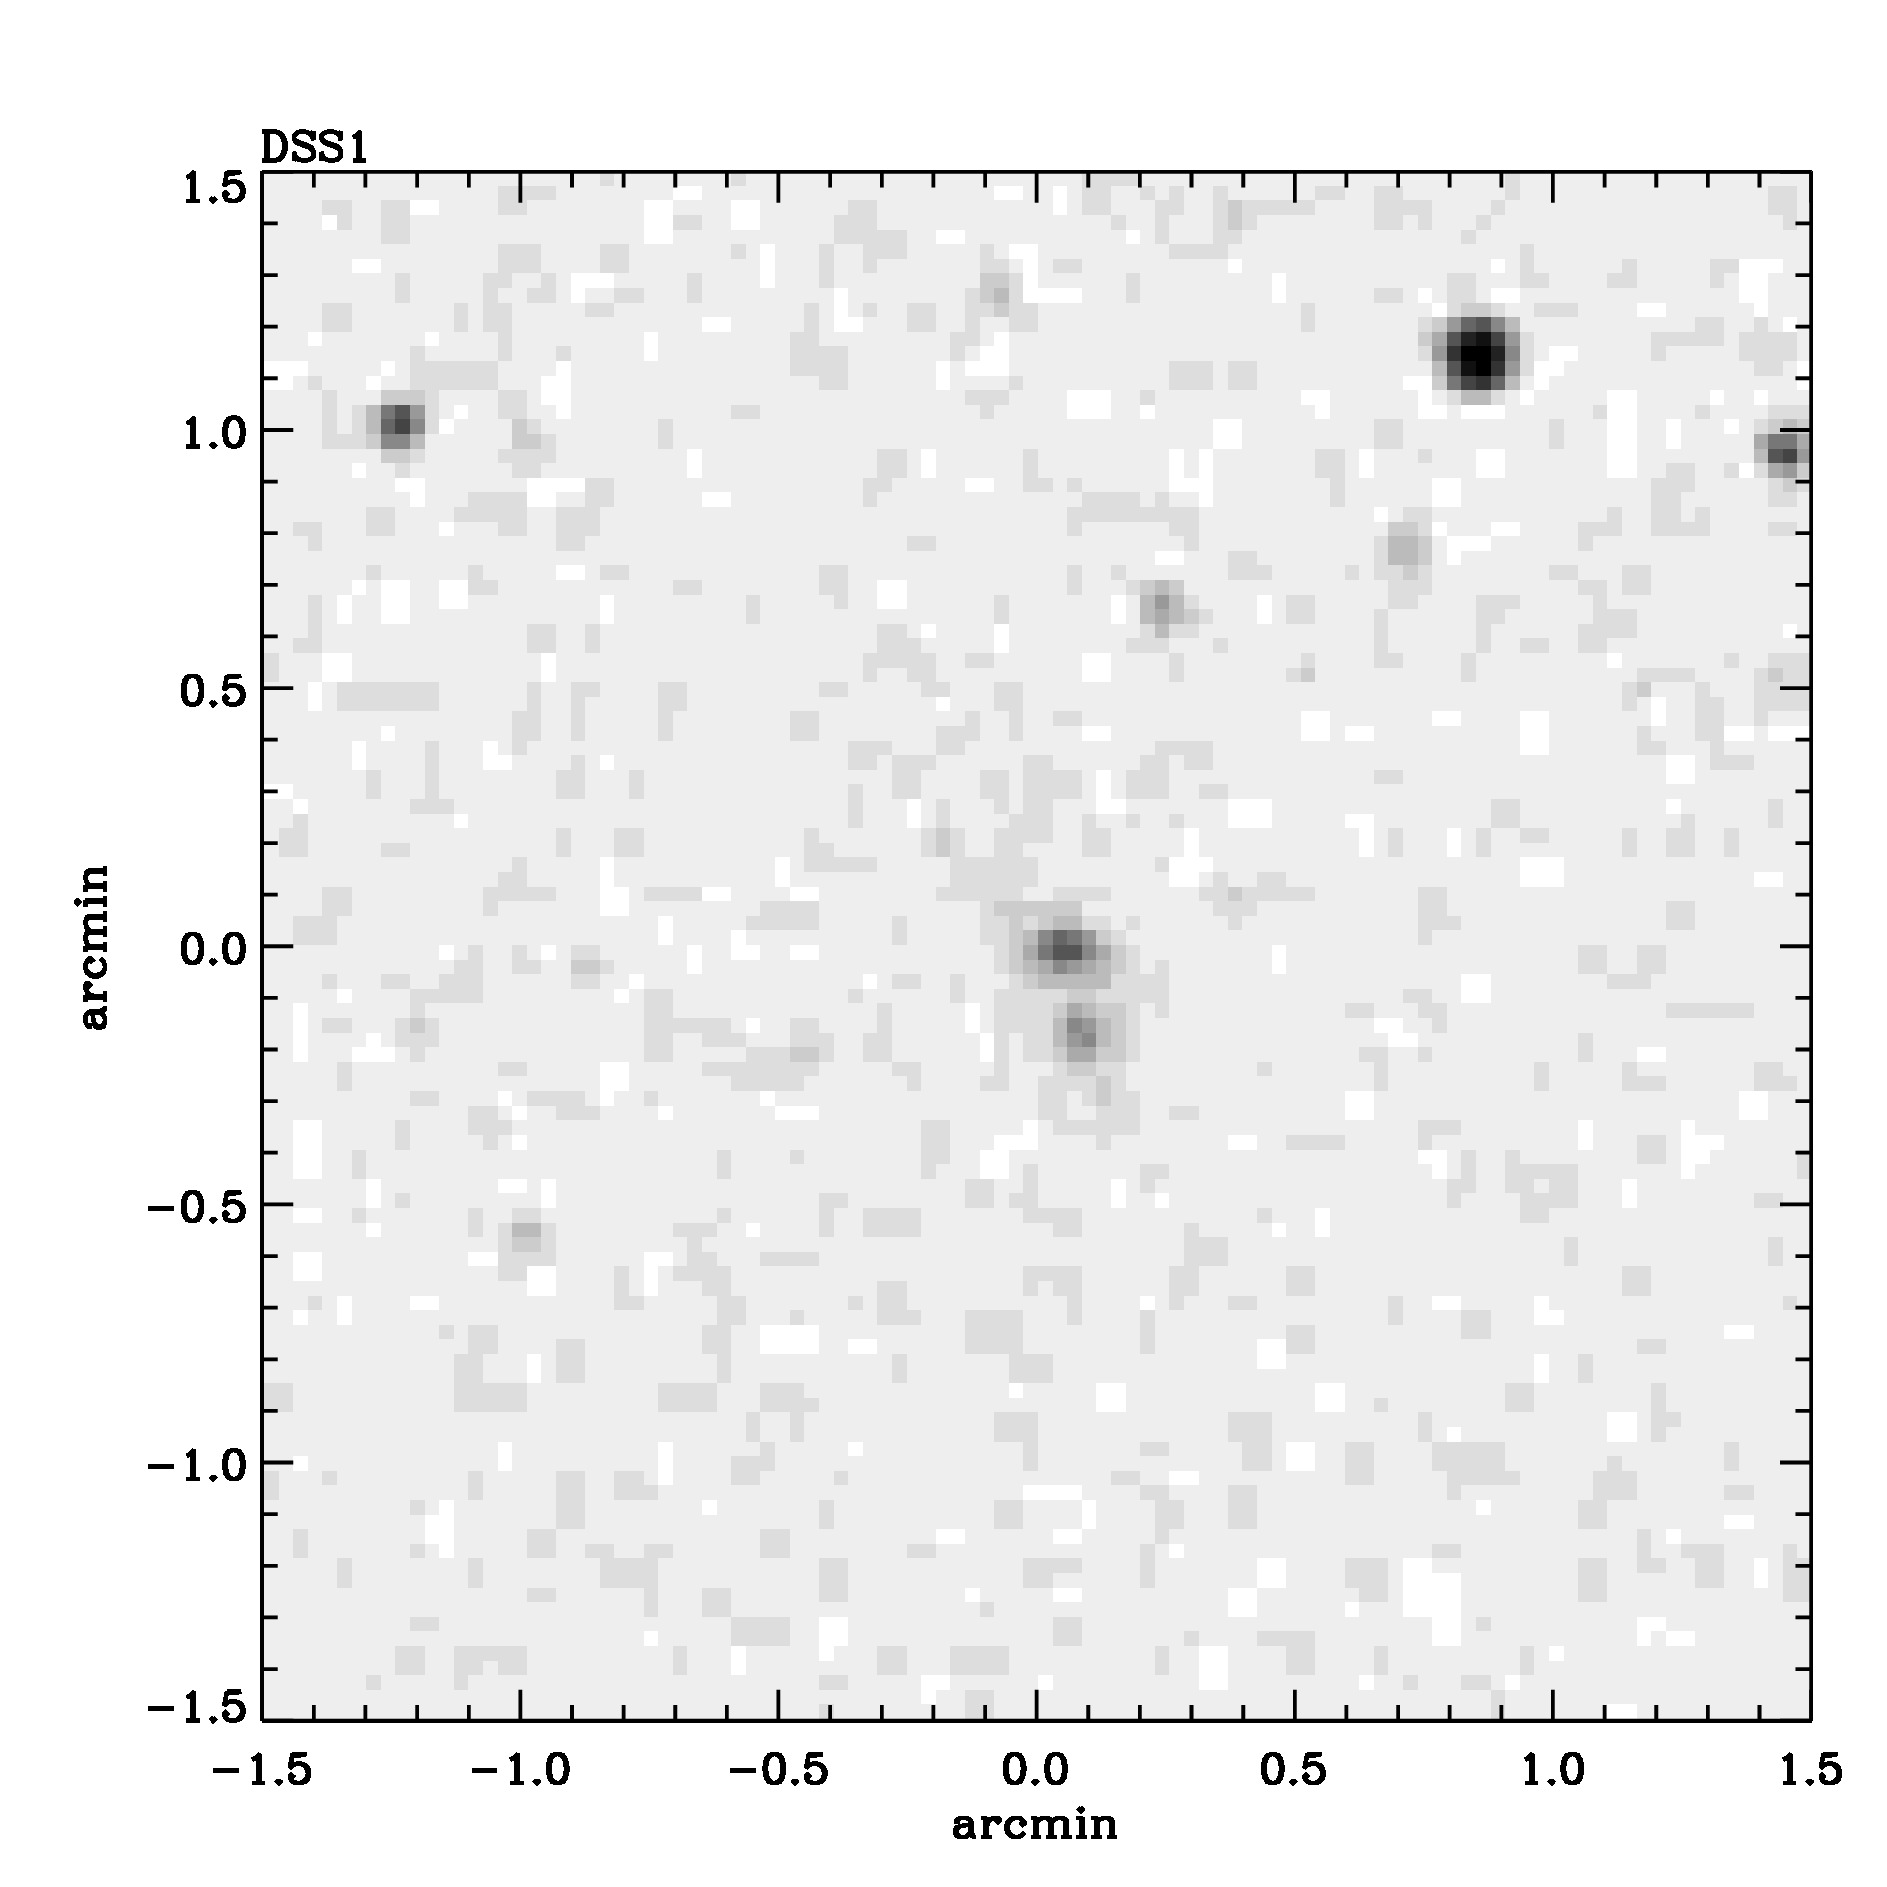 Optical image for SWIFT J1354.5+1326